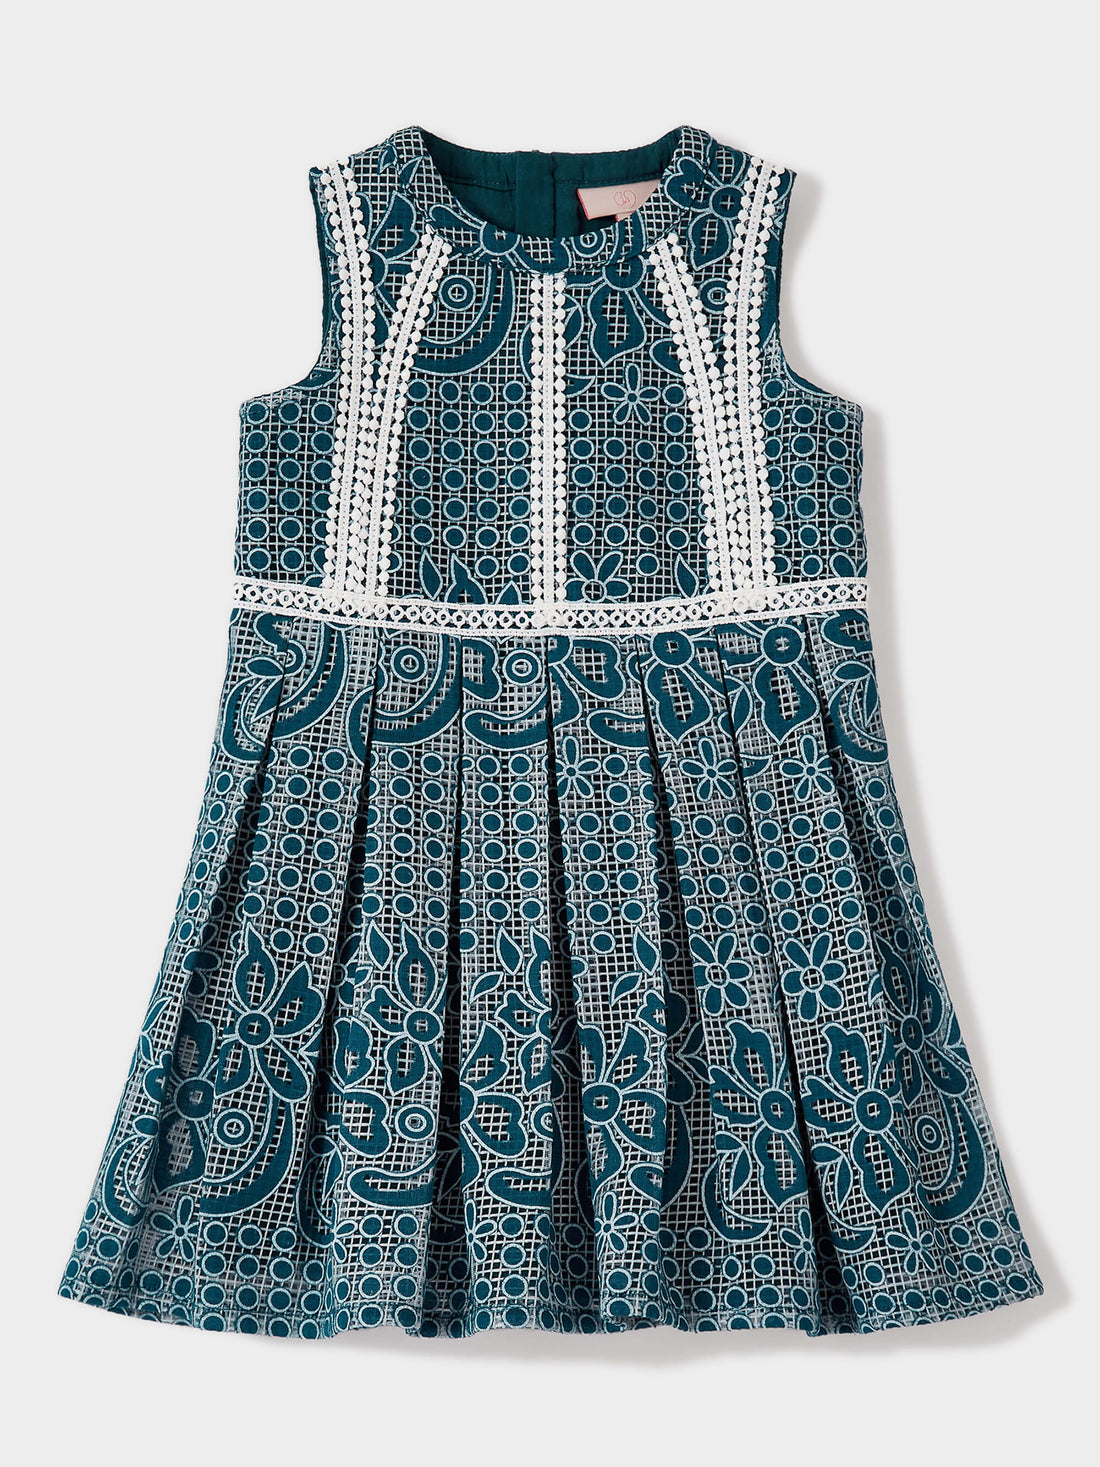 Gilly Lace Dress | GWD Fashion